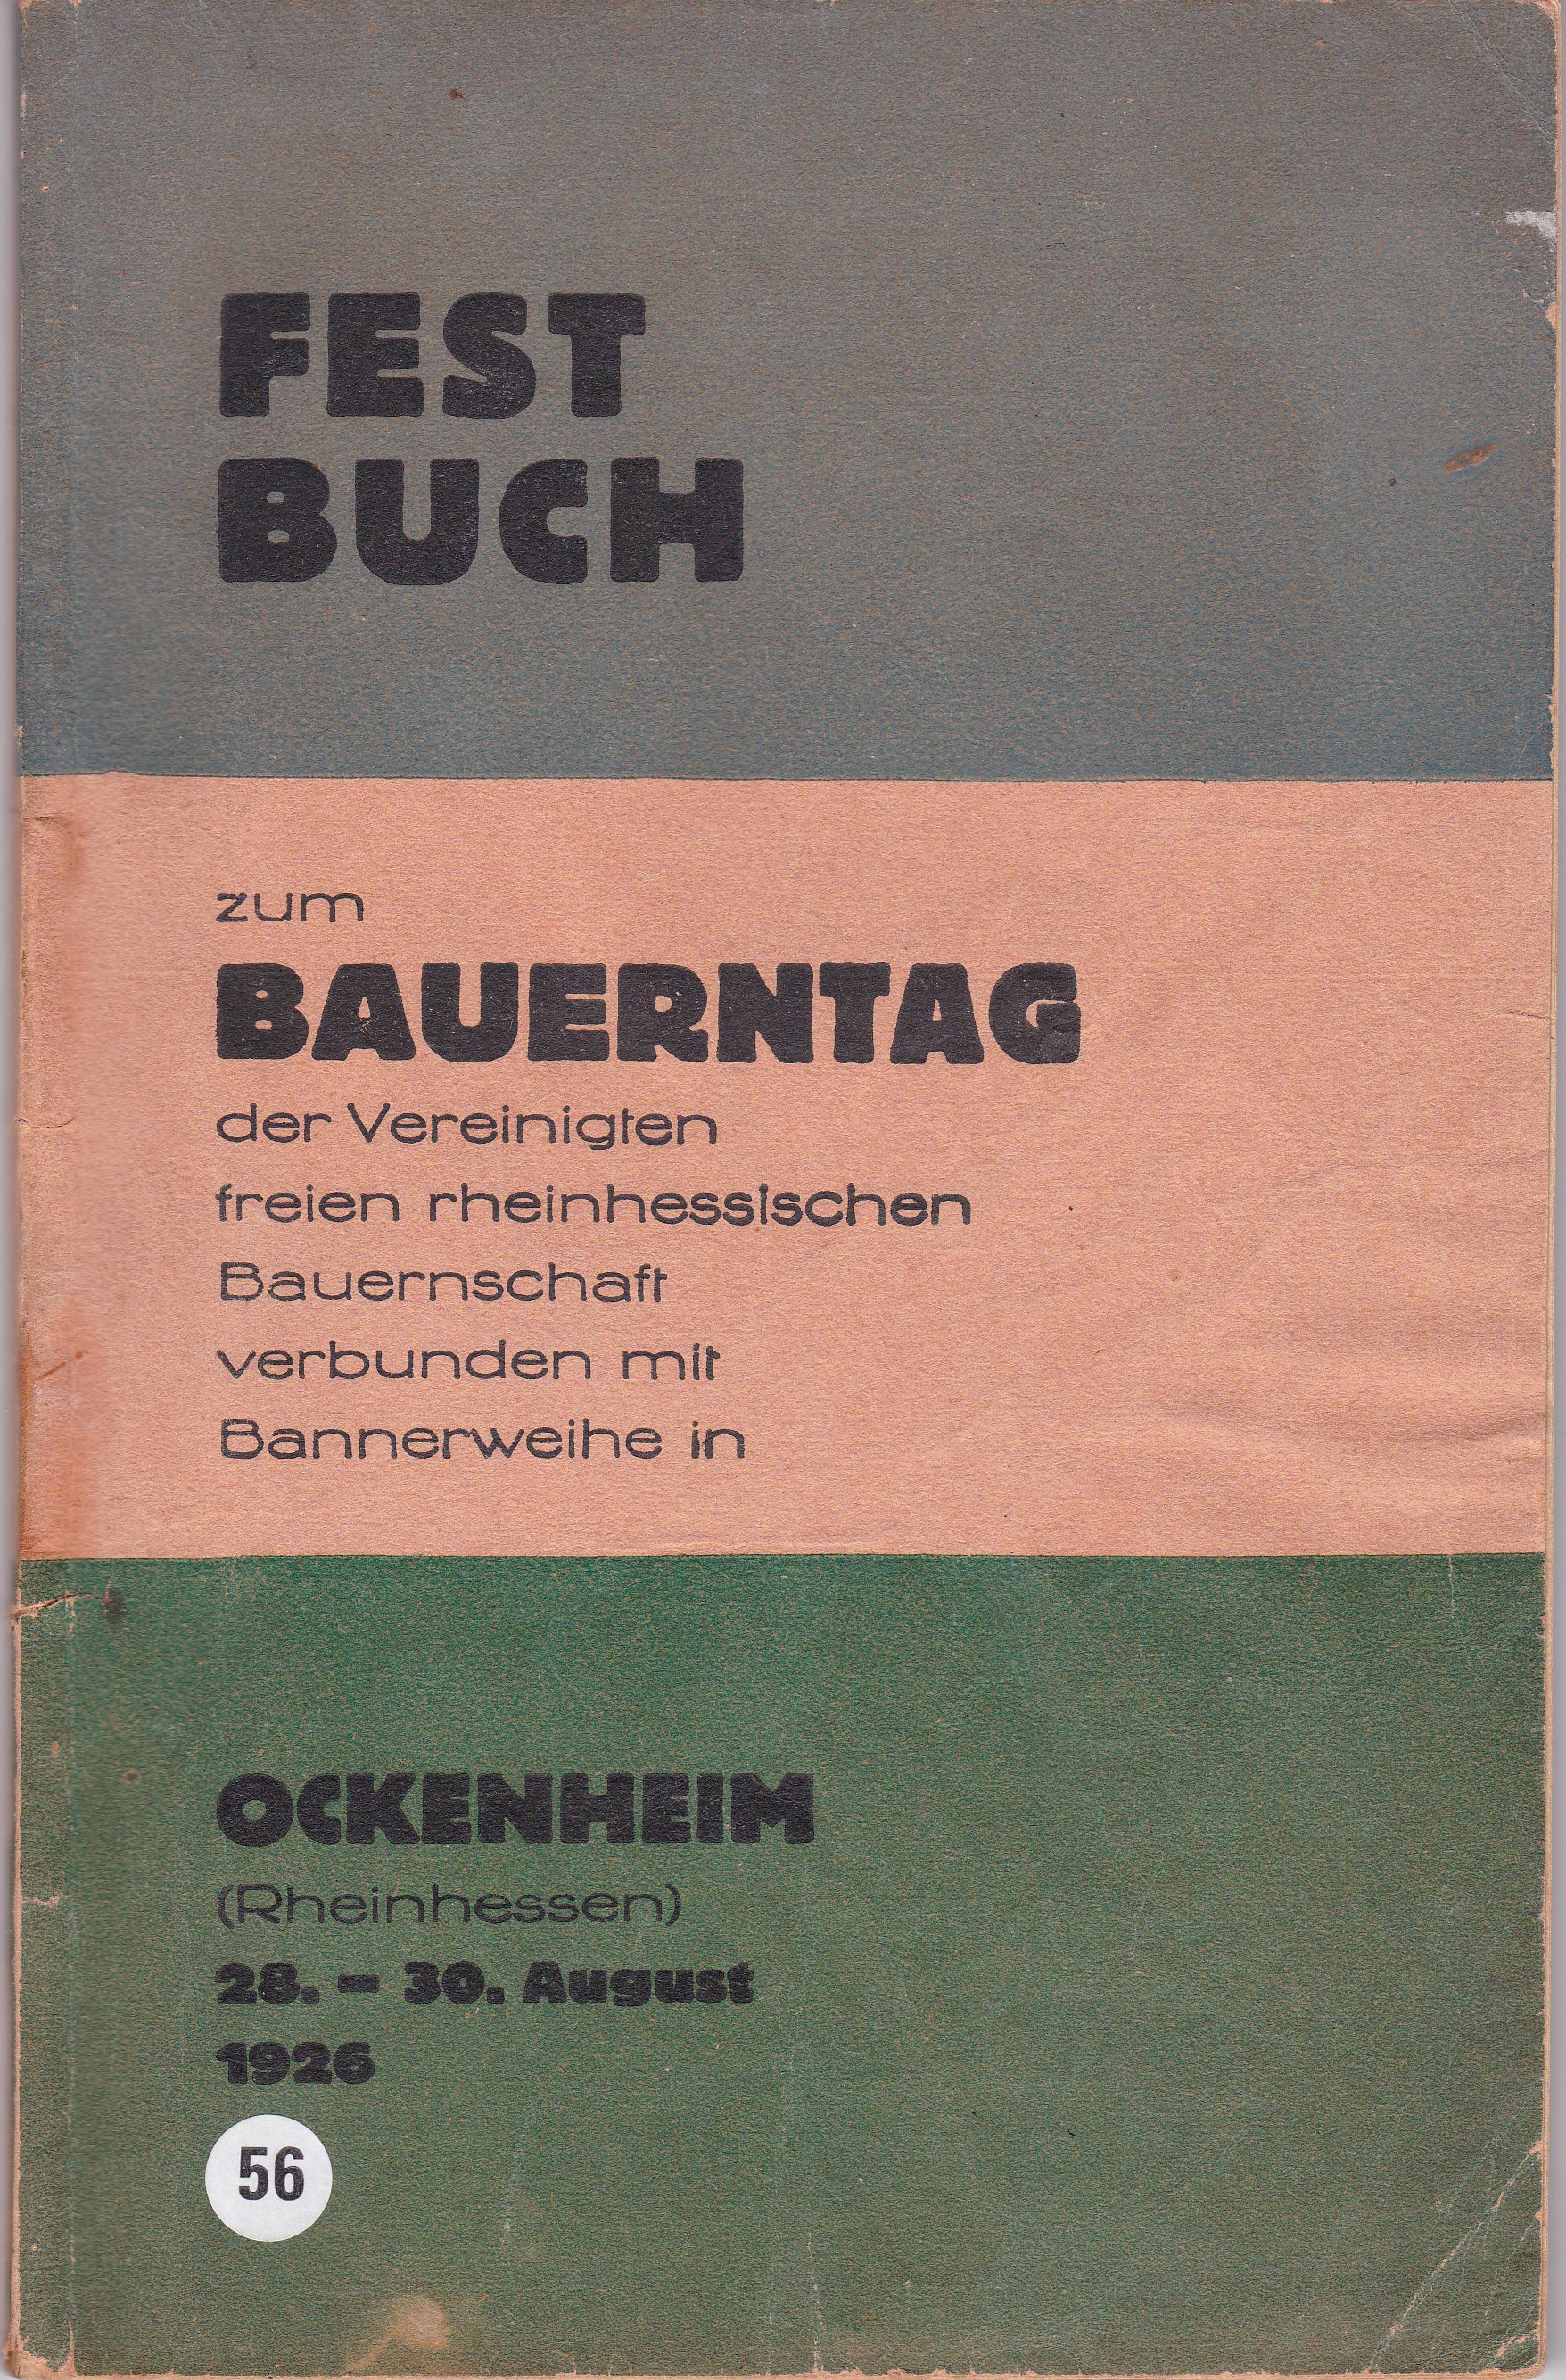 Festbuch zum Bauerntag Ockenheim 1926 (Museum Guntersblum  im Kellerweg 20 CC BY-NC-SA)